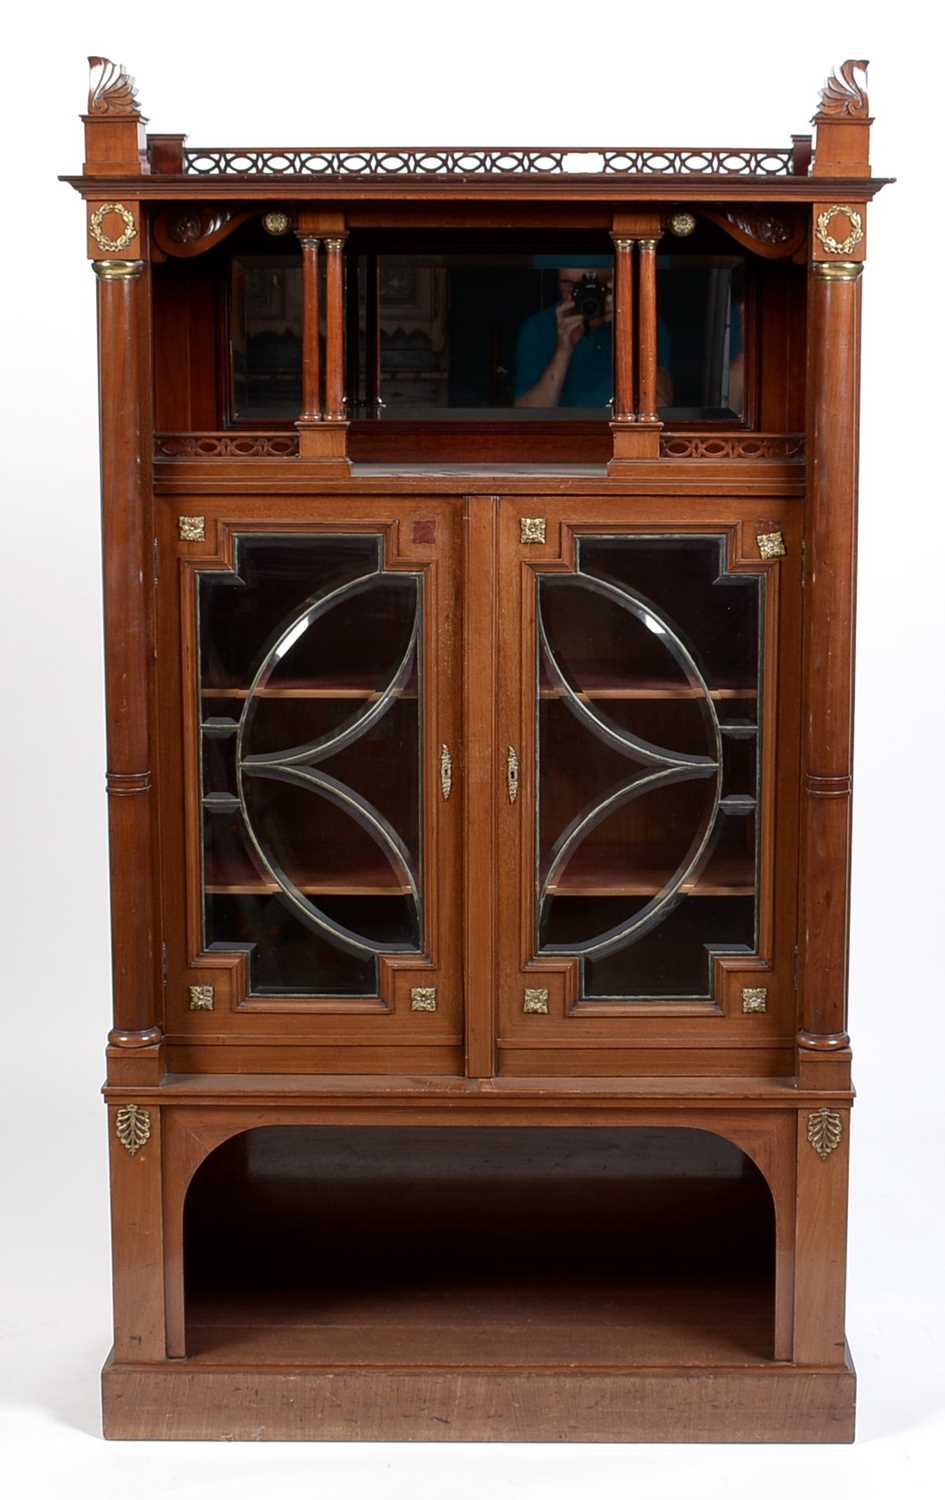 Lot 5 - A late 19th Century mahogany display cabinet